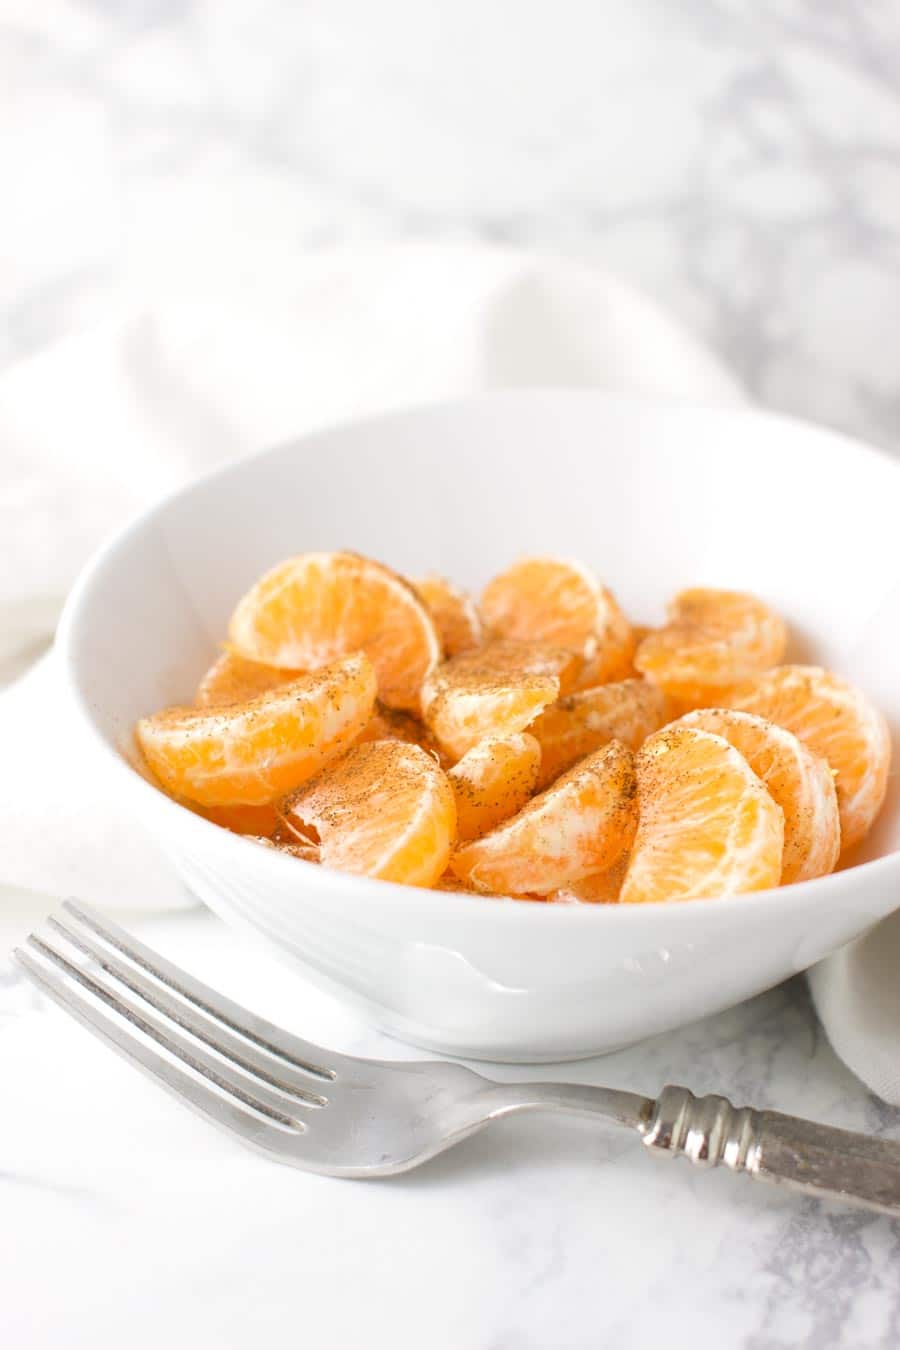 Honey-Cinnamon Oranges recipe from acleanplate.com #paleo #aip #autoimmuneprotocol